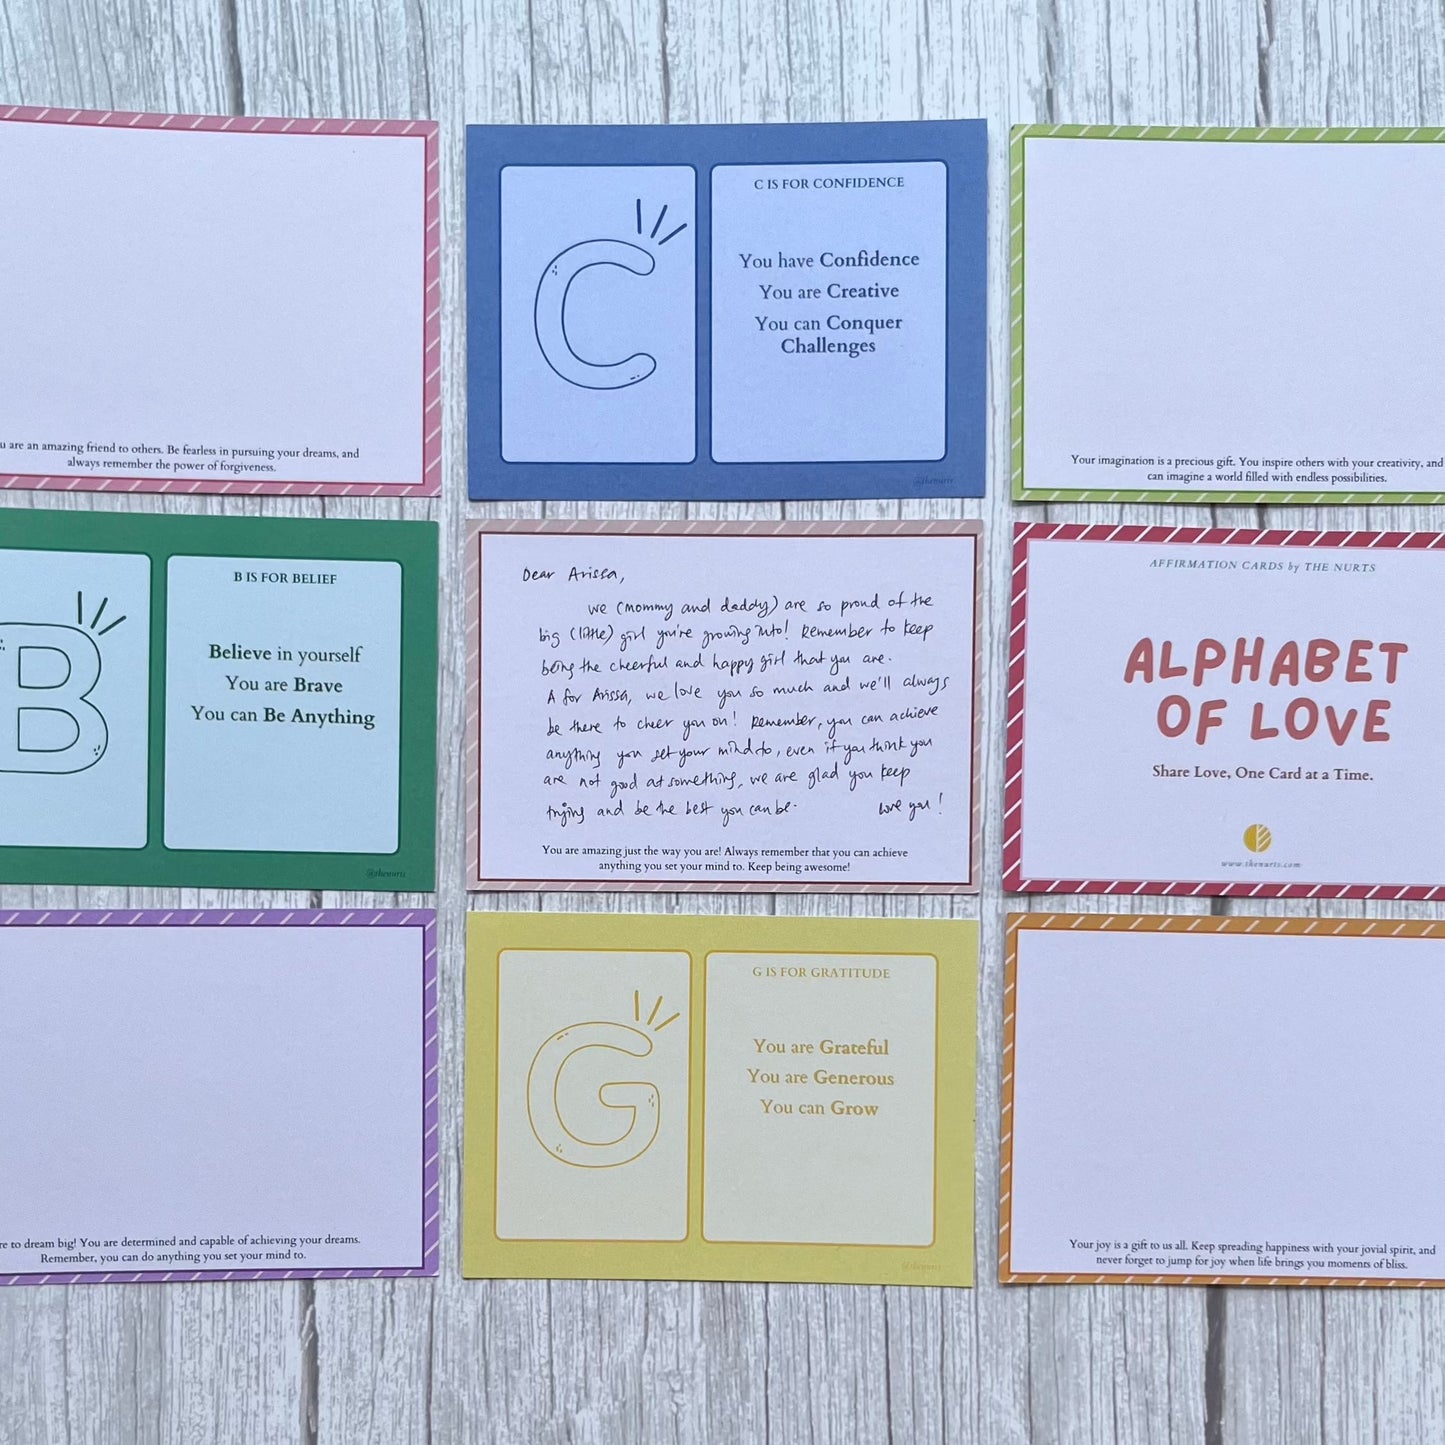 Alphabet of Love Affirmation Cards